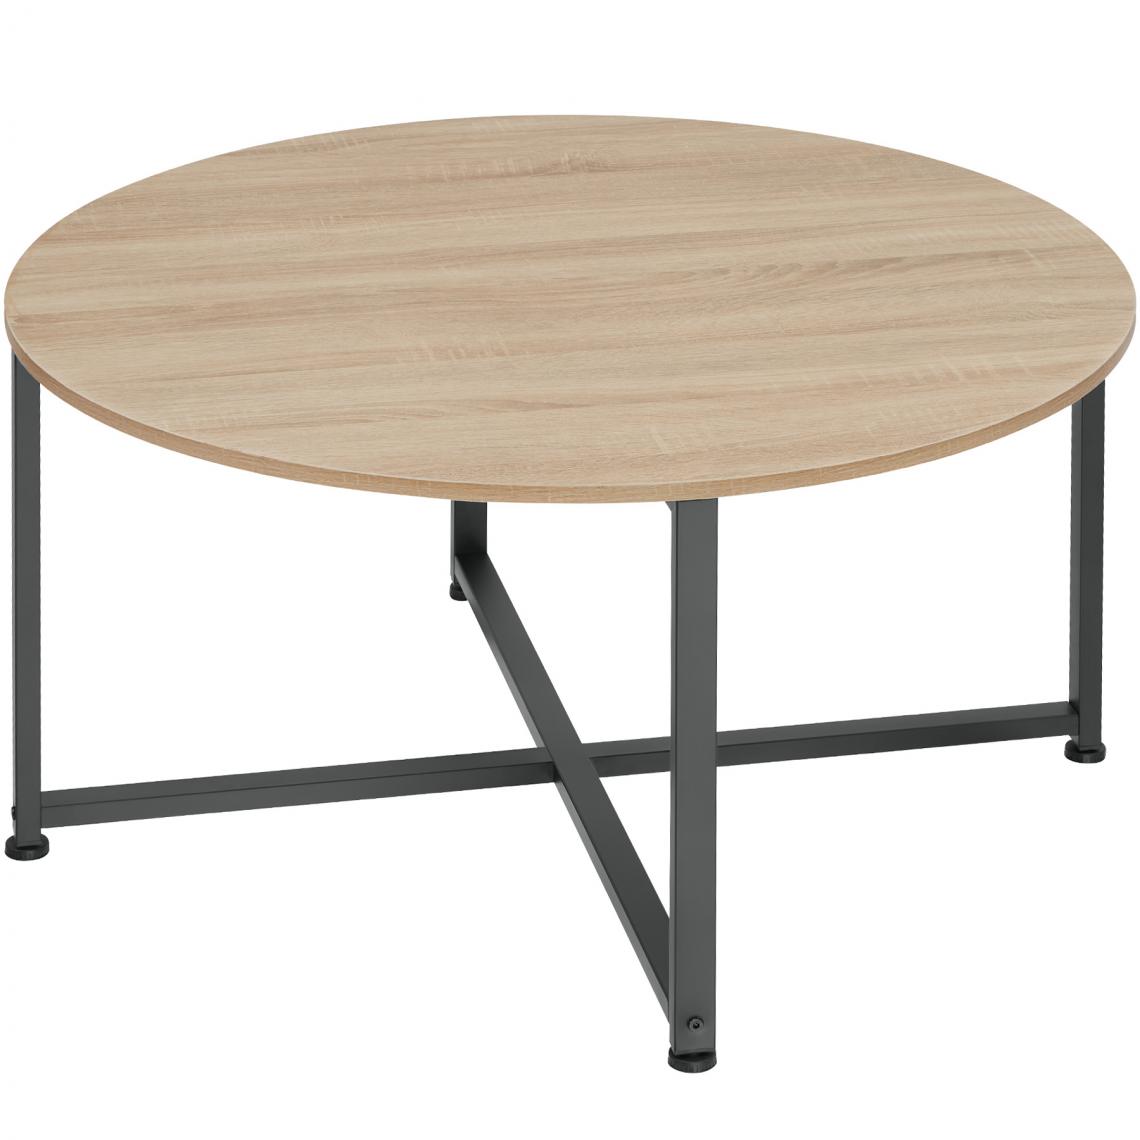 Tectake - Table basse Aberdeen - bois clair industriel - Tables à manger